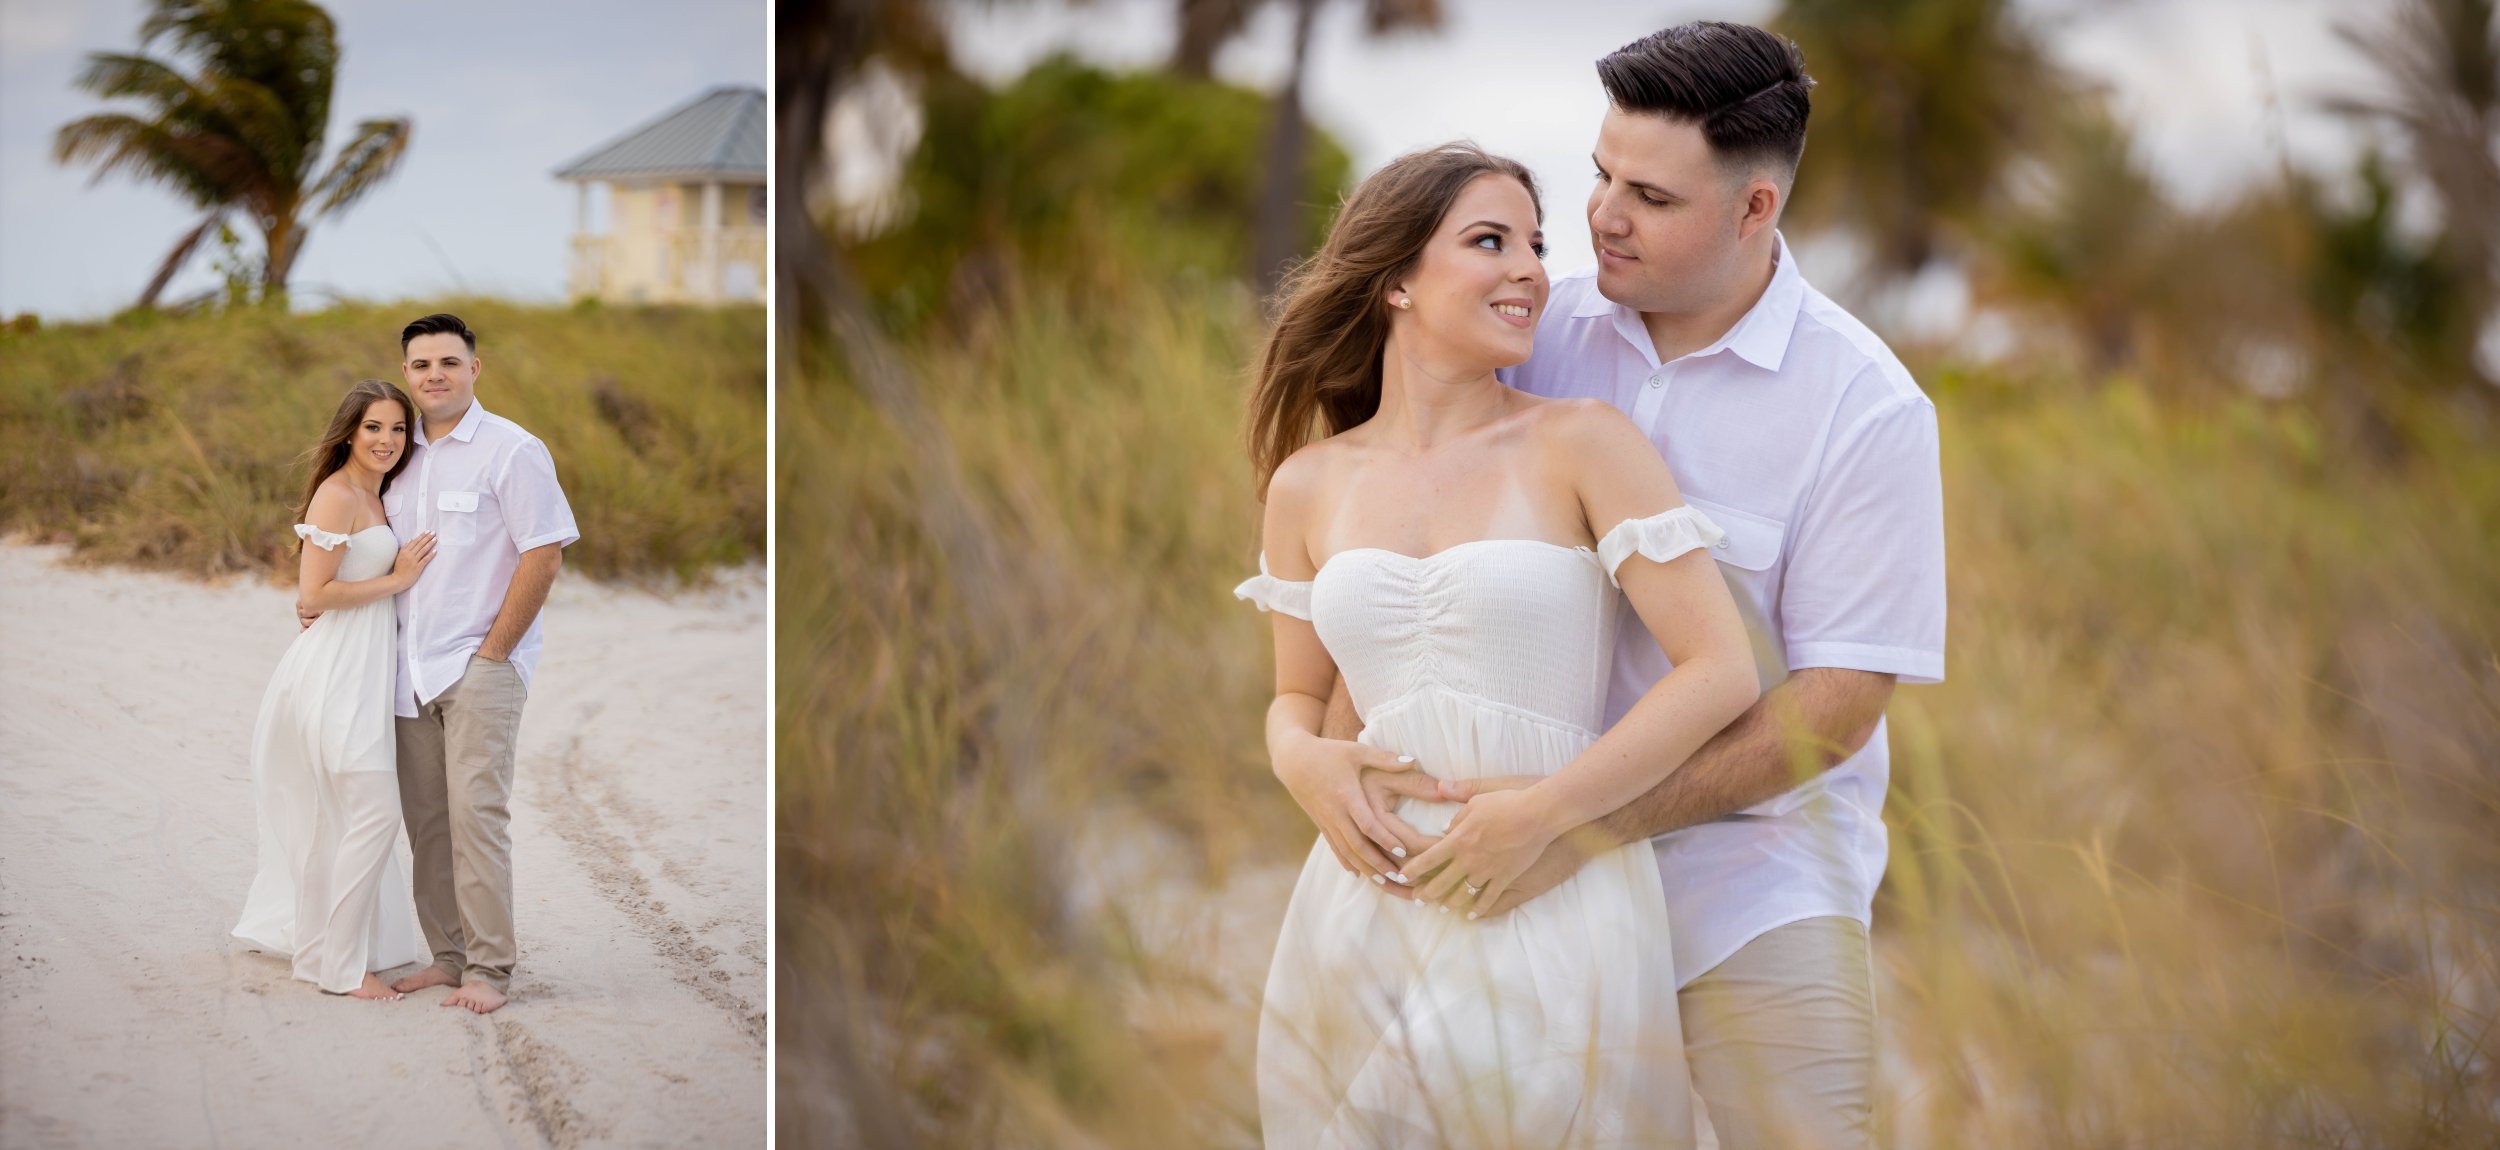 Engagement Session at Crandon Park - Miami Wedding Photographers - Santy Martinez 7.jpg